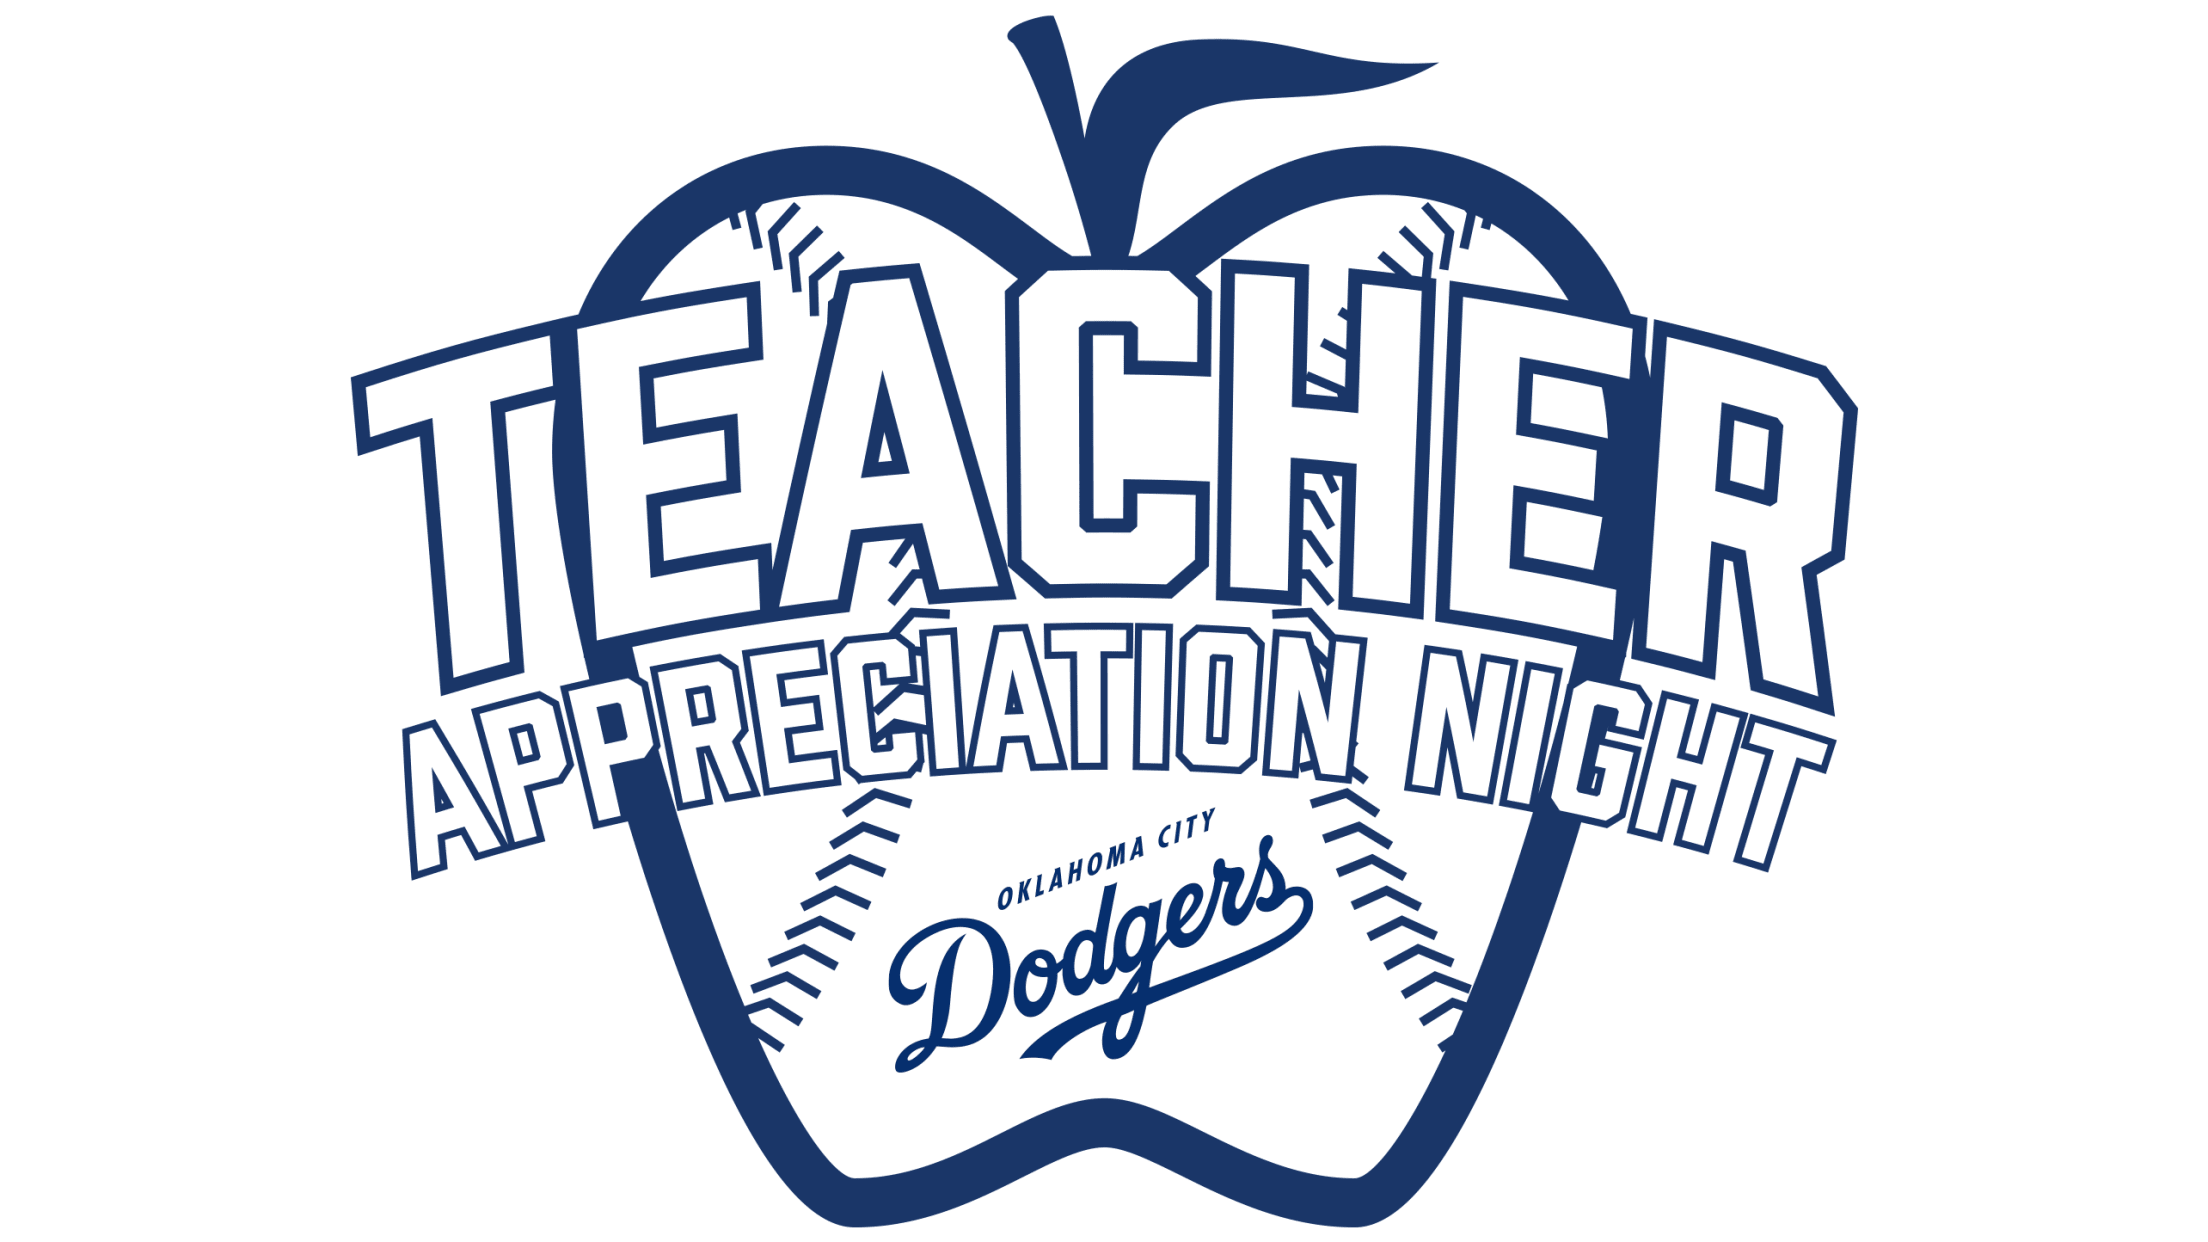 Teacher Appreciation Night Dodgers